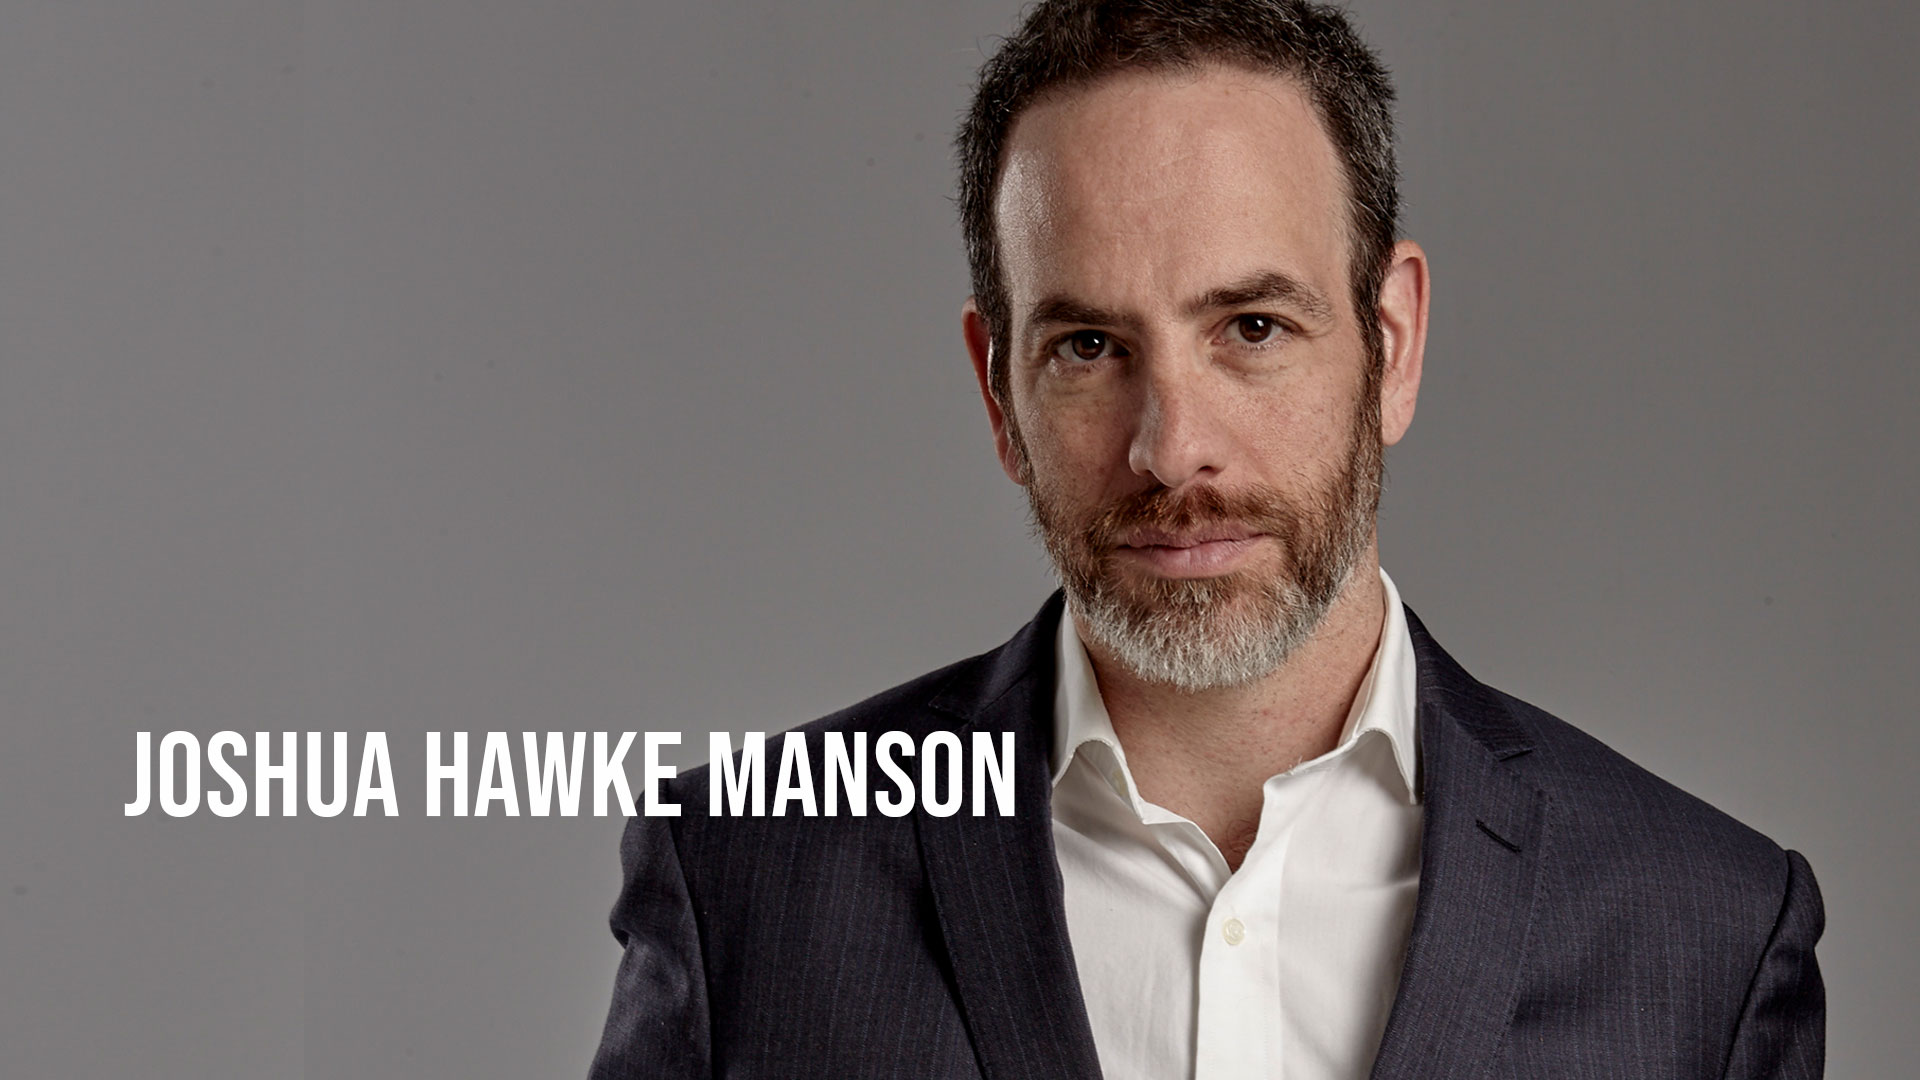 Joshua Hawke Manson - Videobook Actor